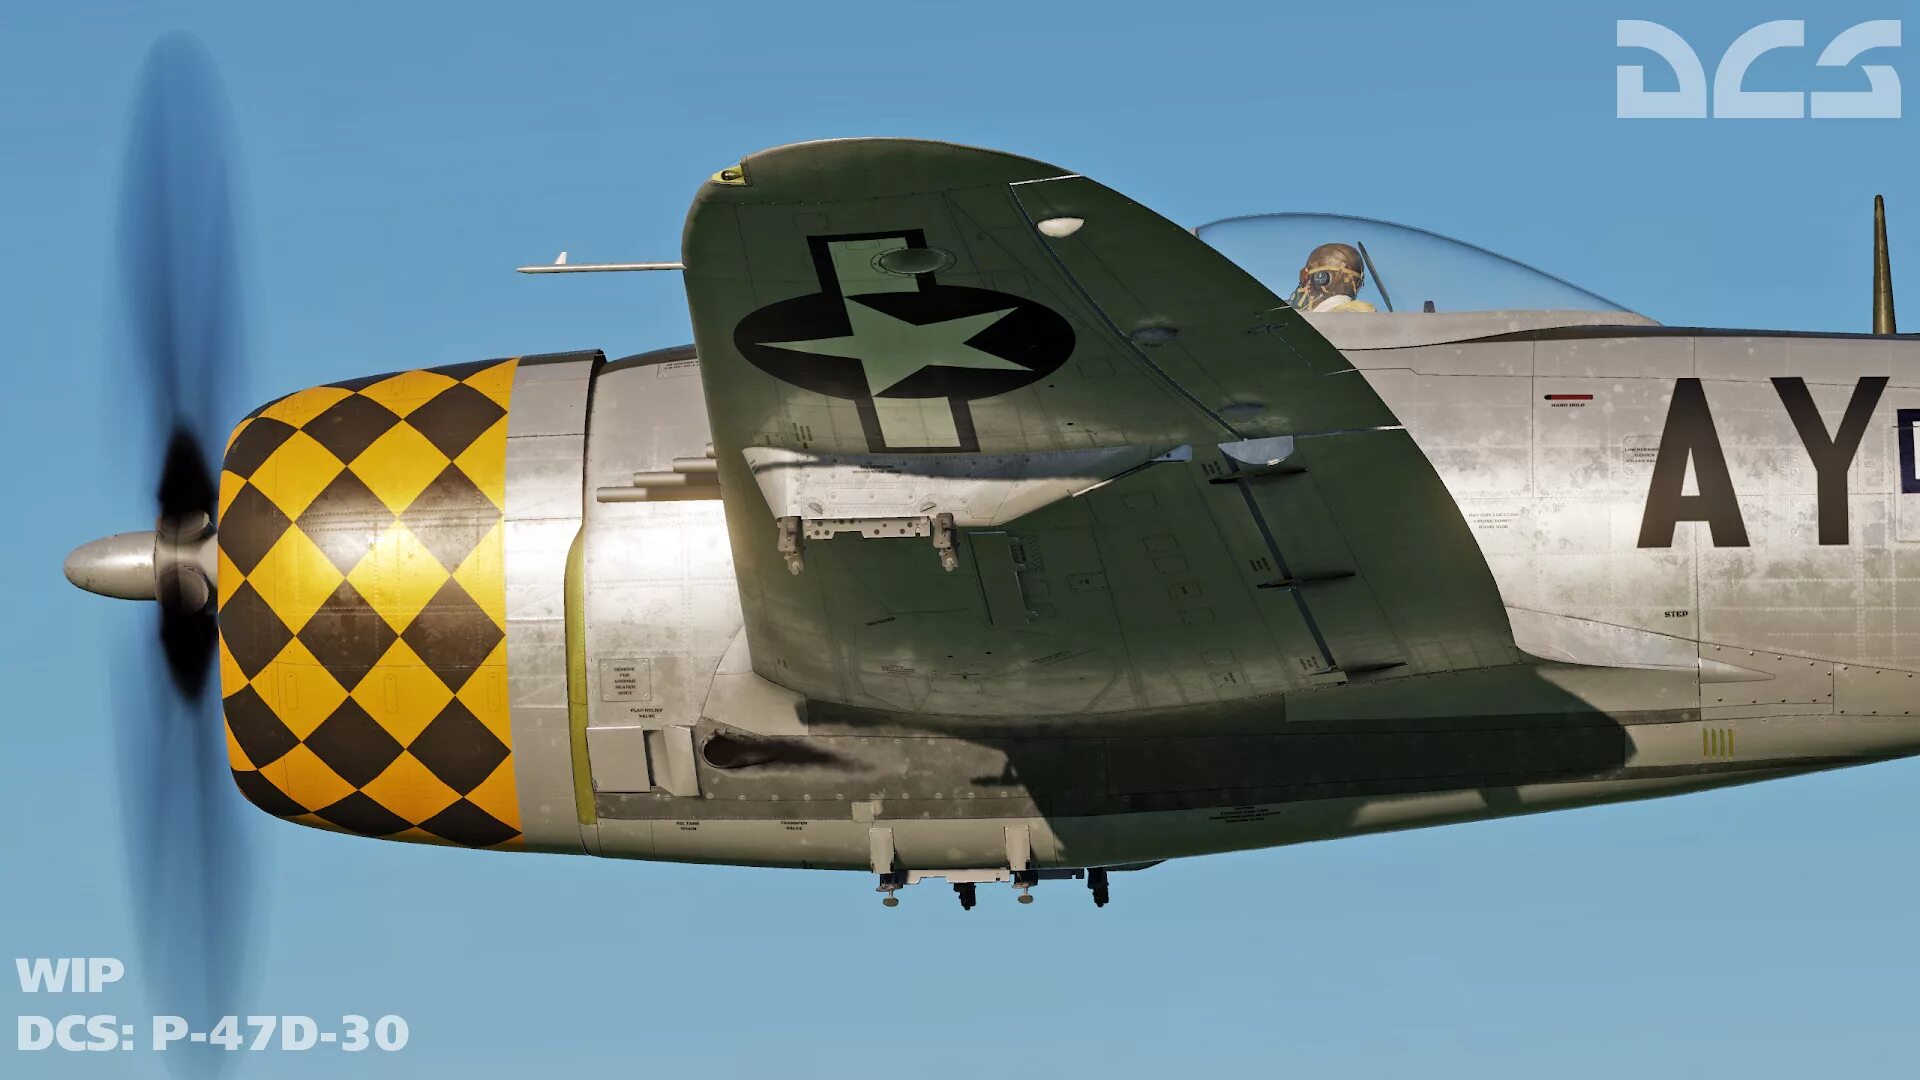 P-47d Thunderbolt. P-47 Thunderbolt. Истребитель Тандерболт р-47. Самолет п 47 Тандерболт.